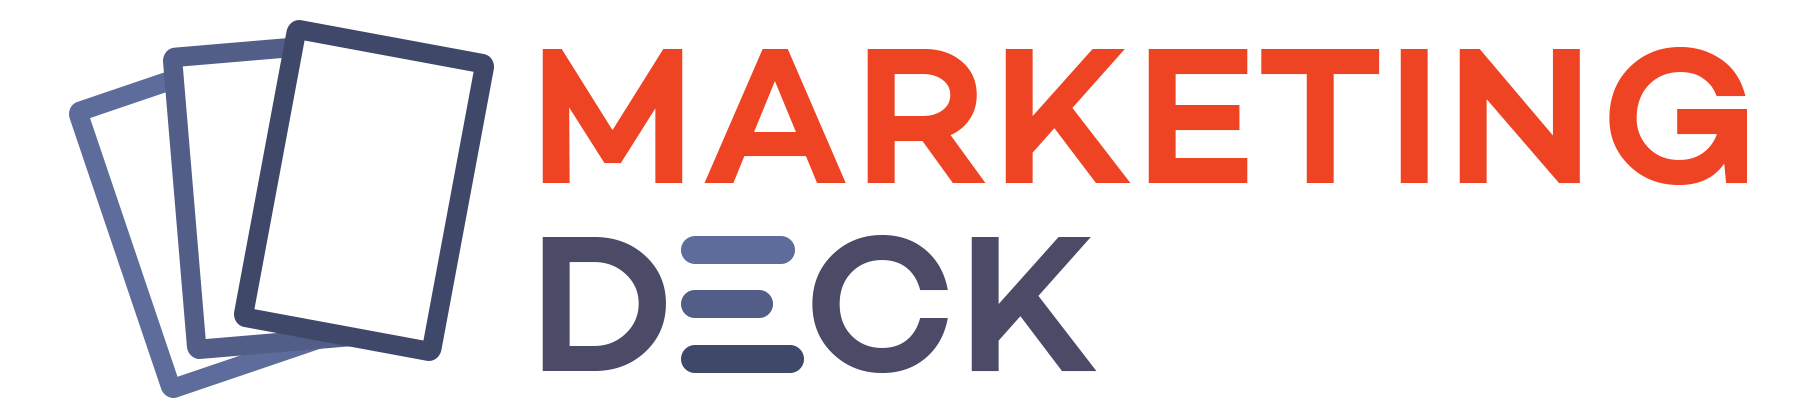 logo marketing deck